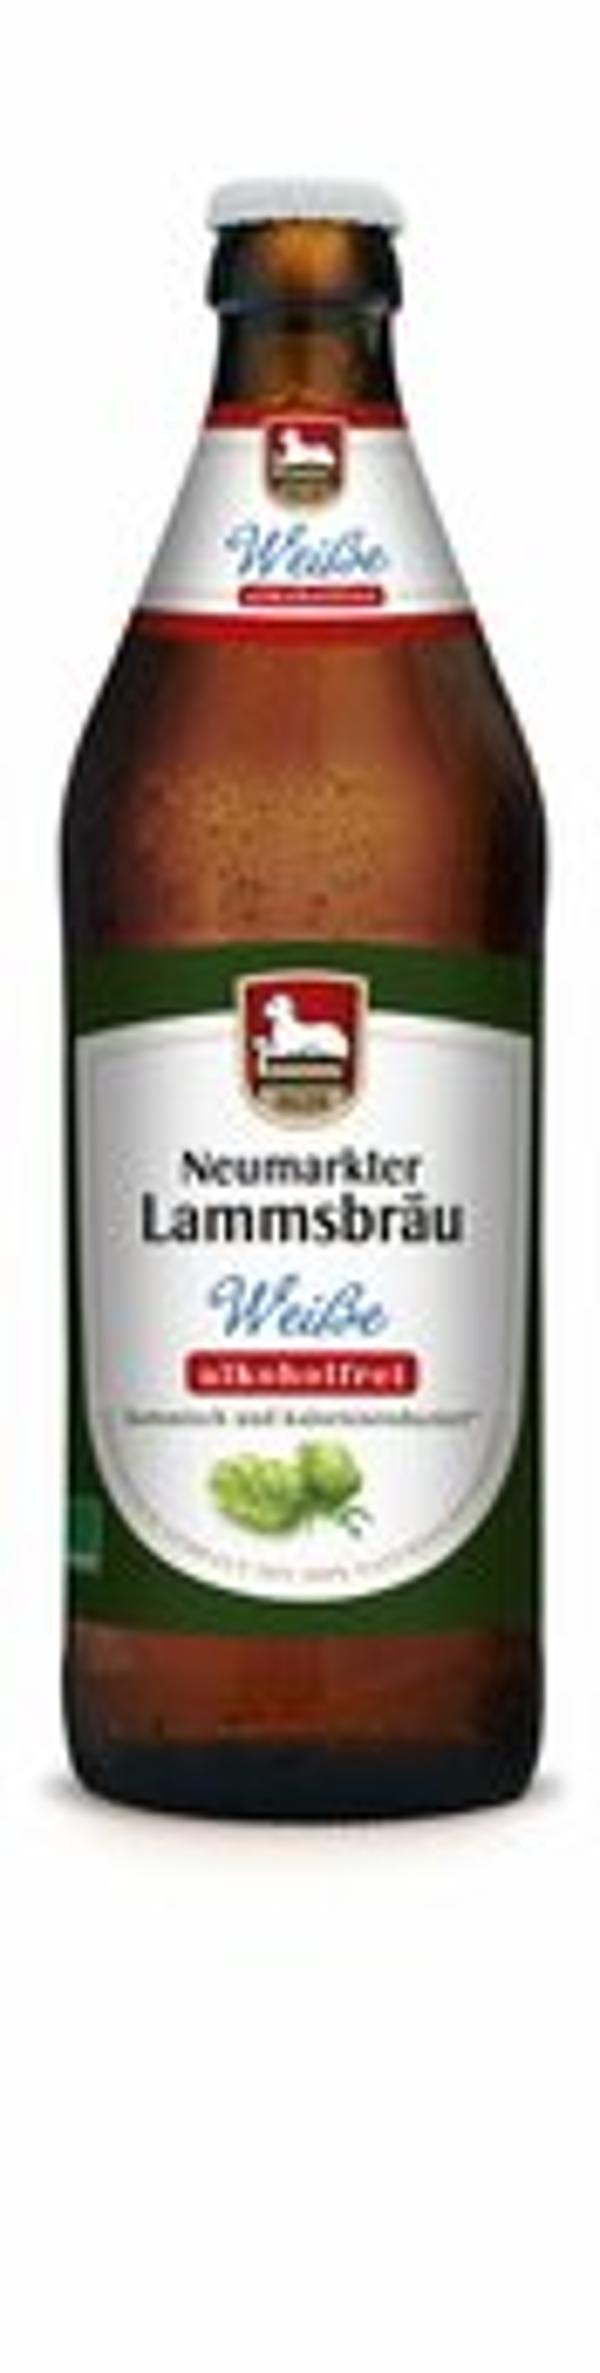 Produktfoto zu Kiste Lammsbräu Weisse Alkoholfrei (10 x 0,5l)